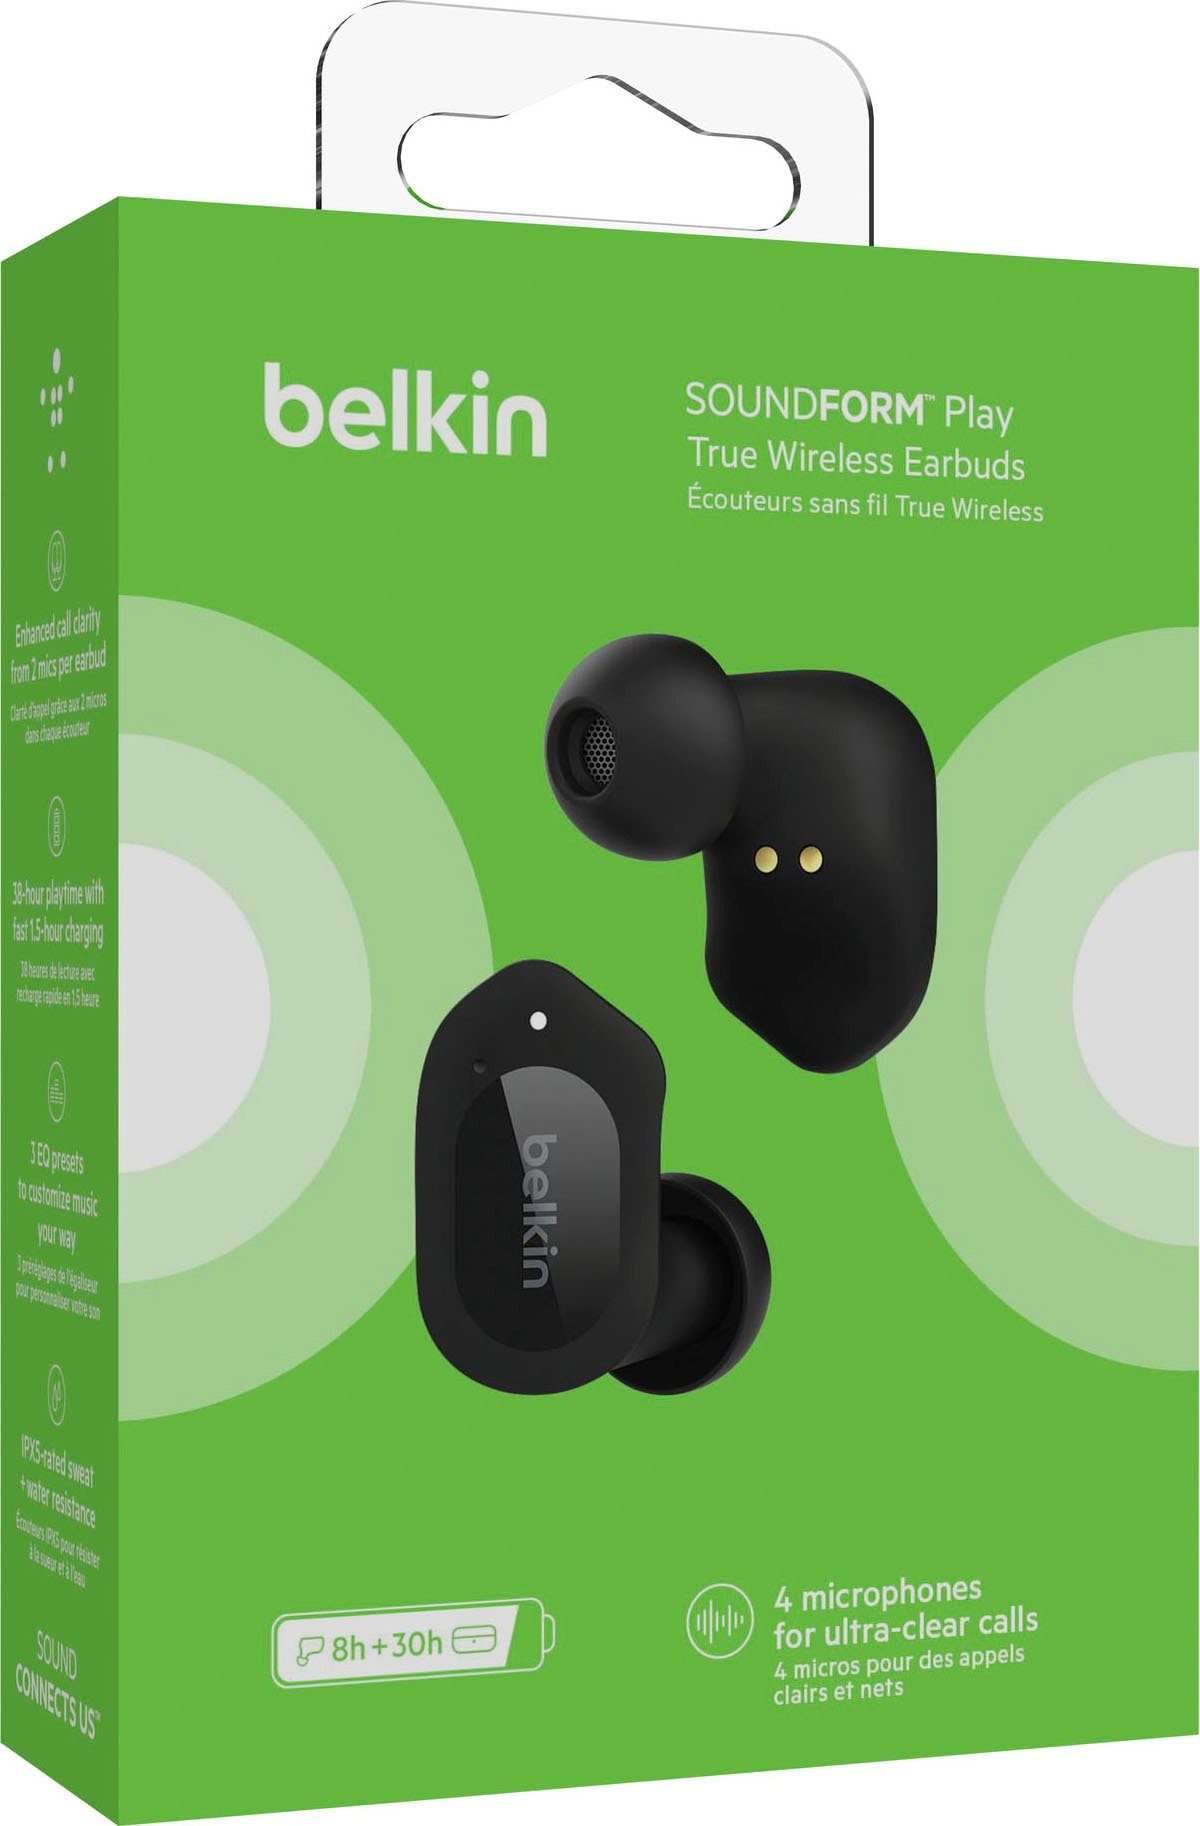 schwarz Kopfhörer Wireless Play Kopfhörer Schalldruckpegel: dB) (Maximaler In-Ear Belkin wireless - 98 True SOUNDFORM